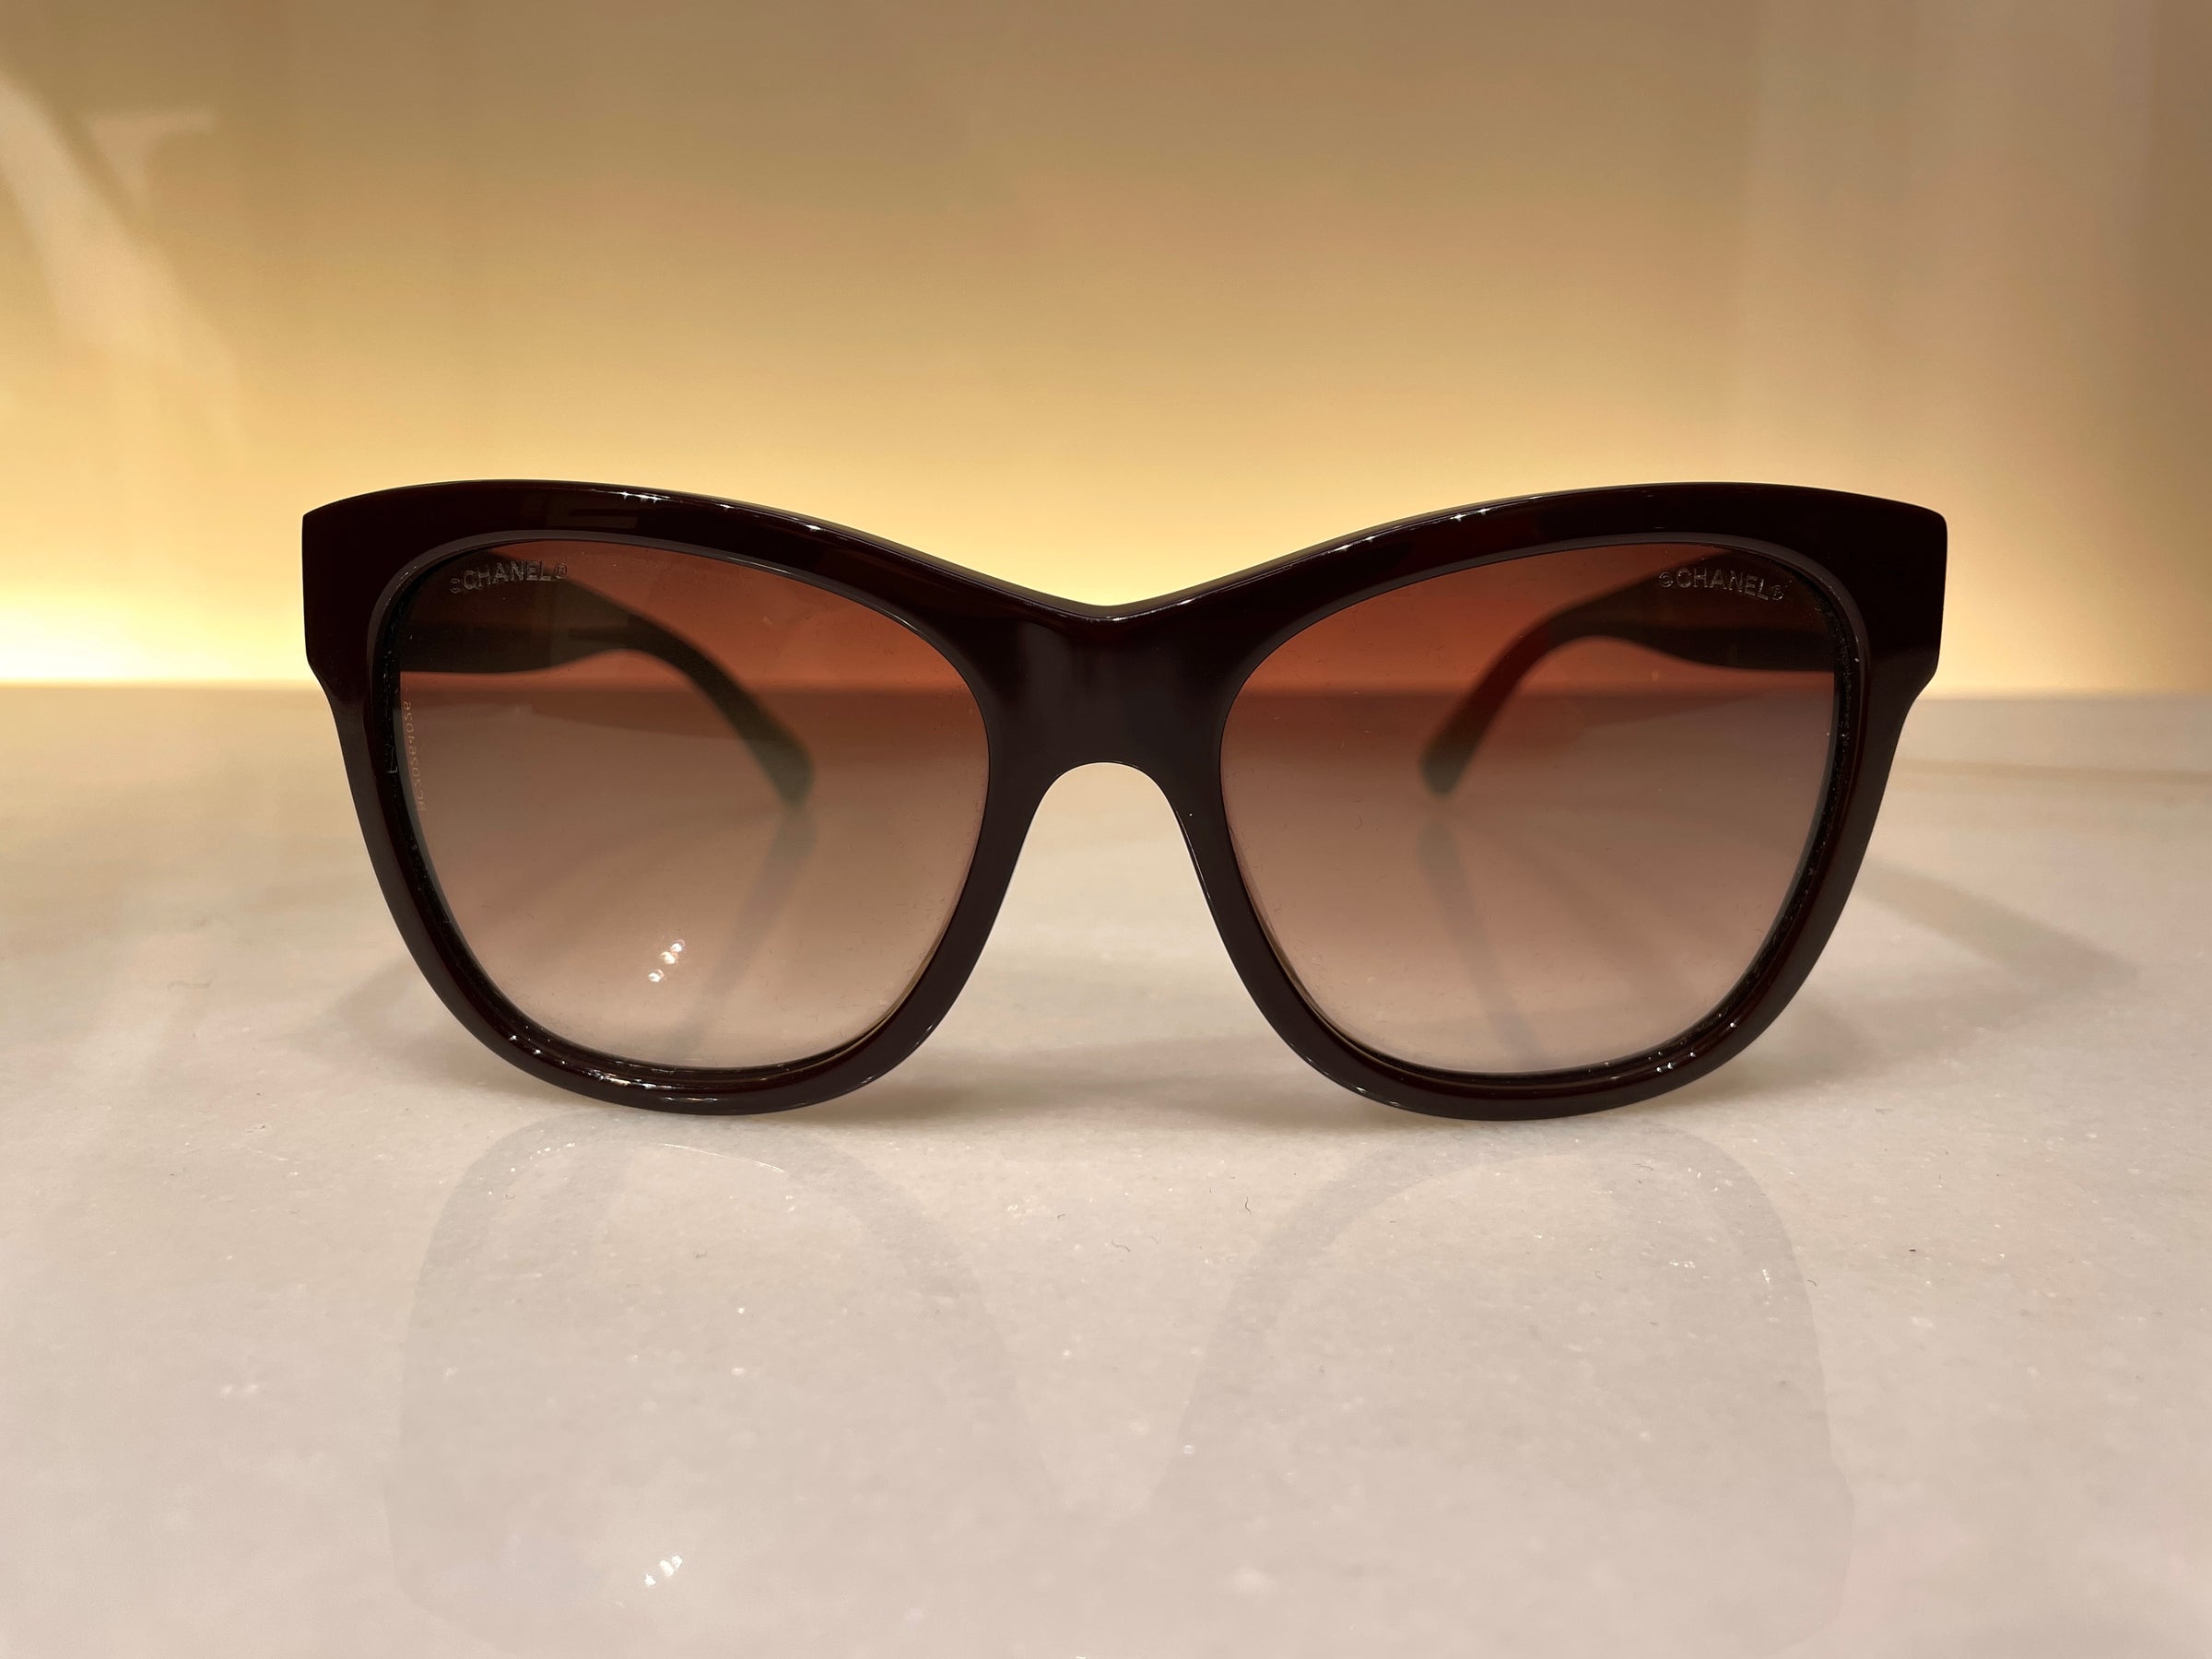 Chanel burgundy sunglasses w/mirrored lenses